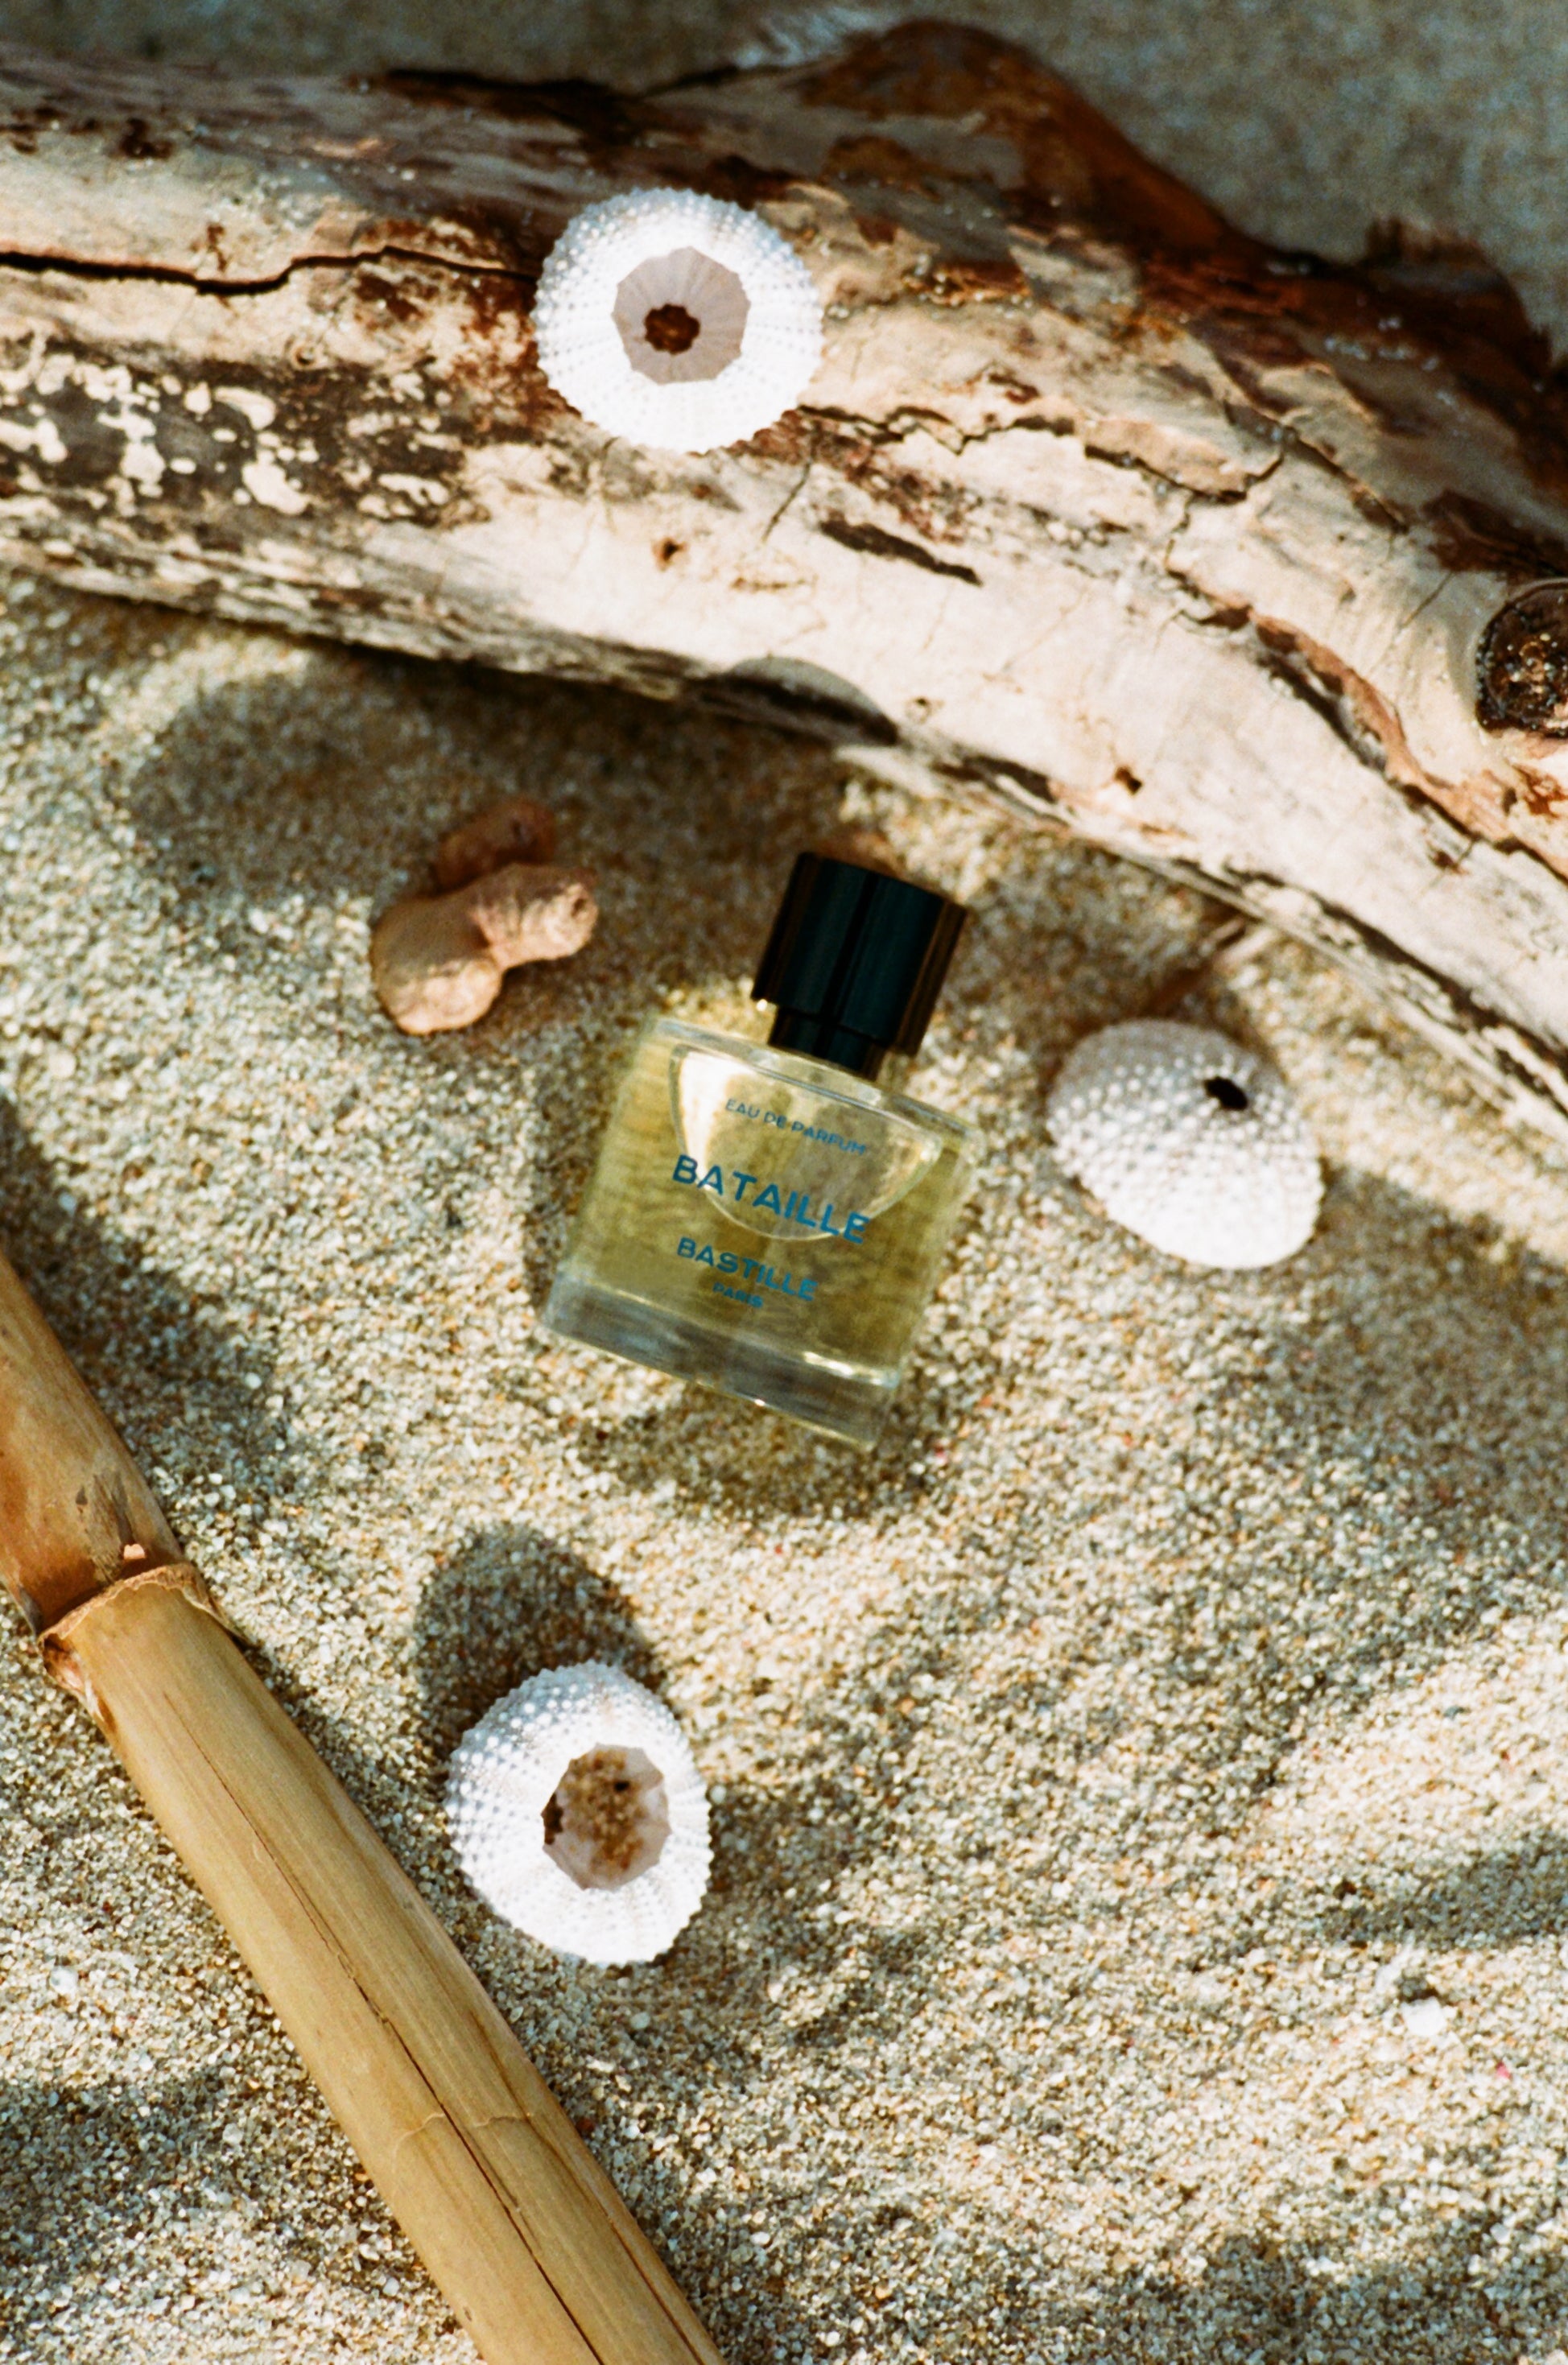 Perfume on the sand